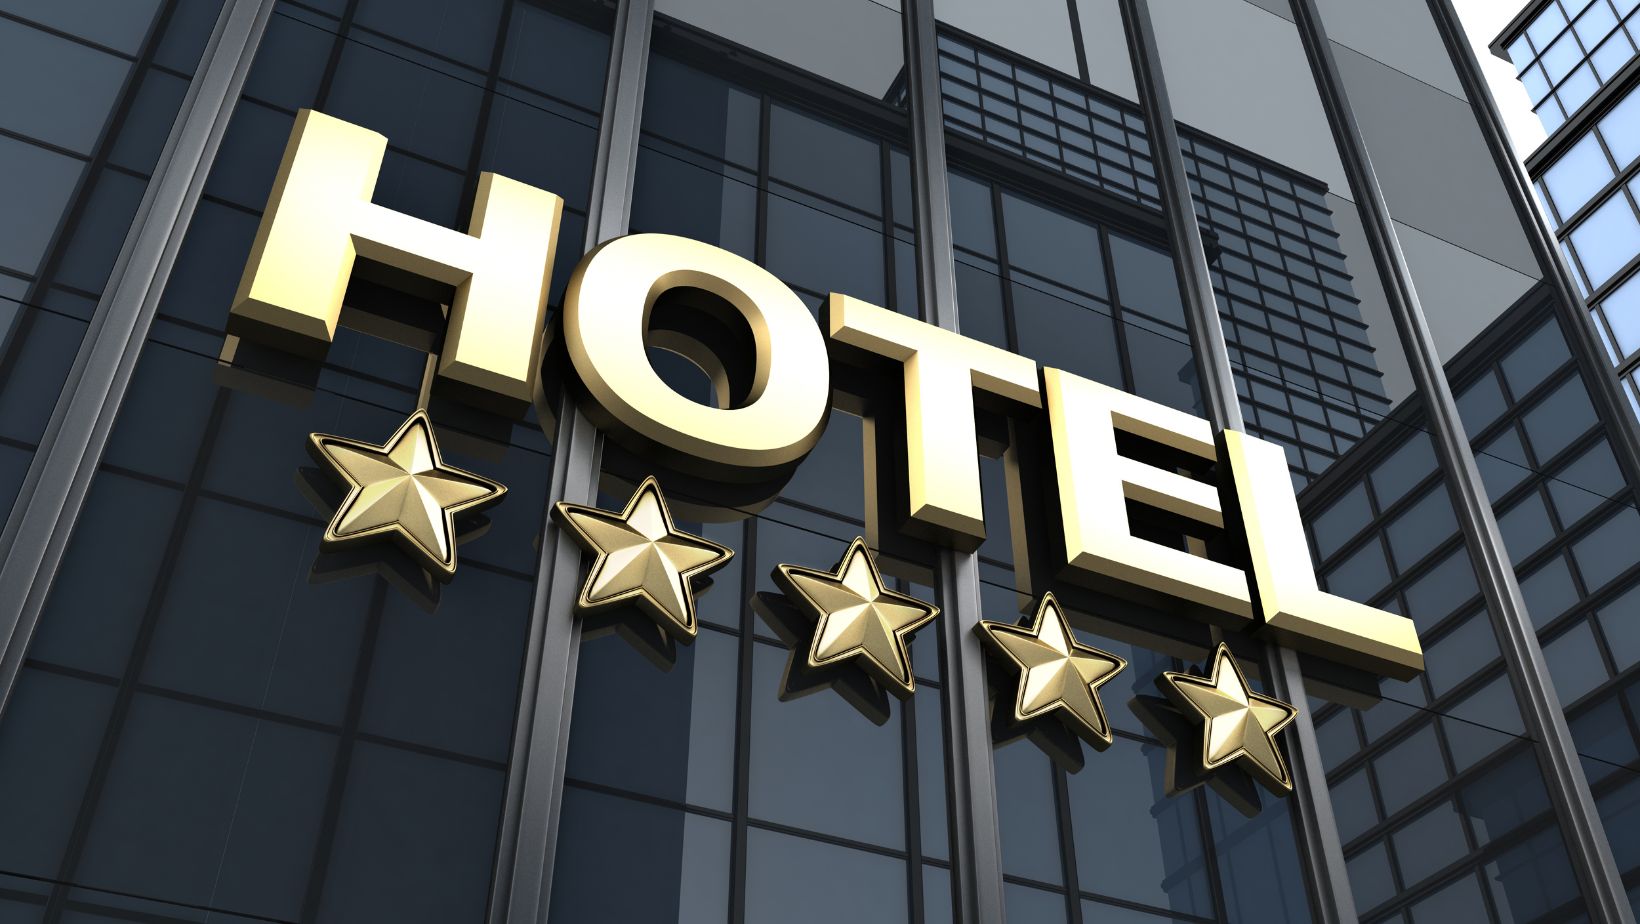 Hampton Hotels Names Top 10 Weekend Getaway Destinations in the USA